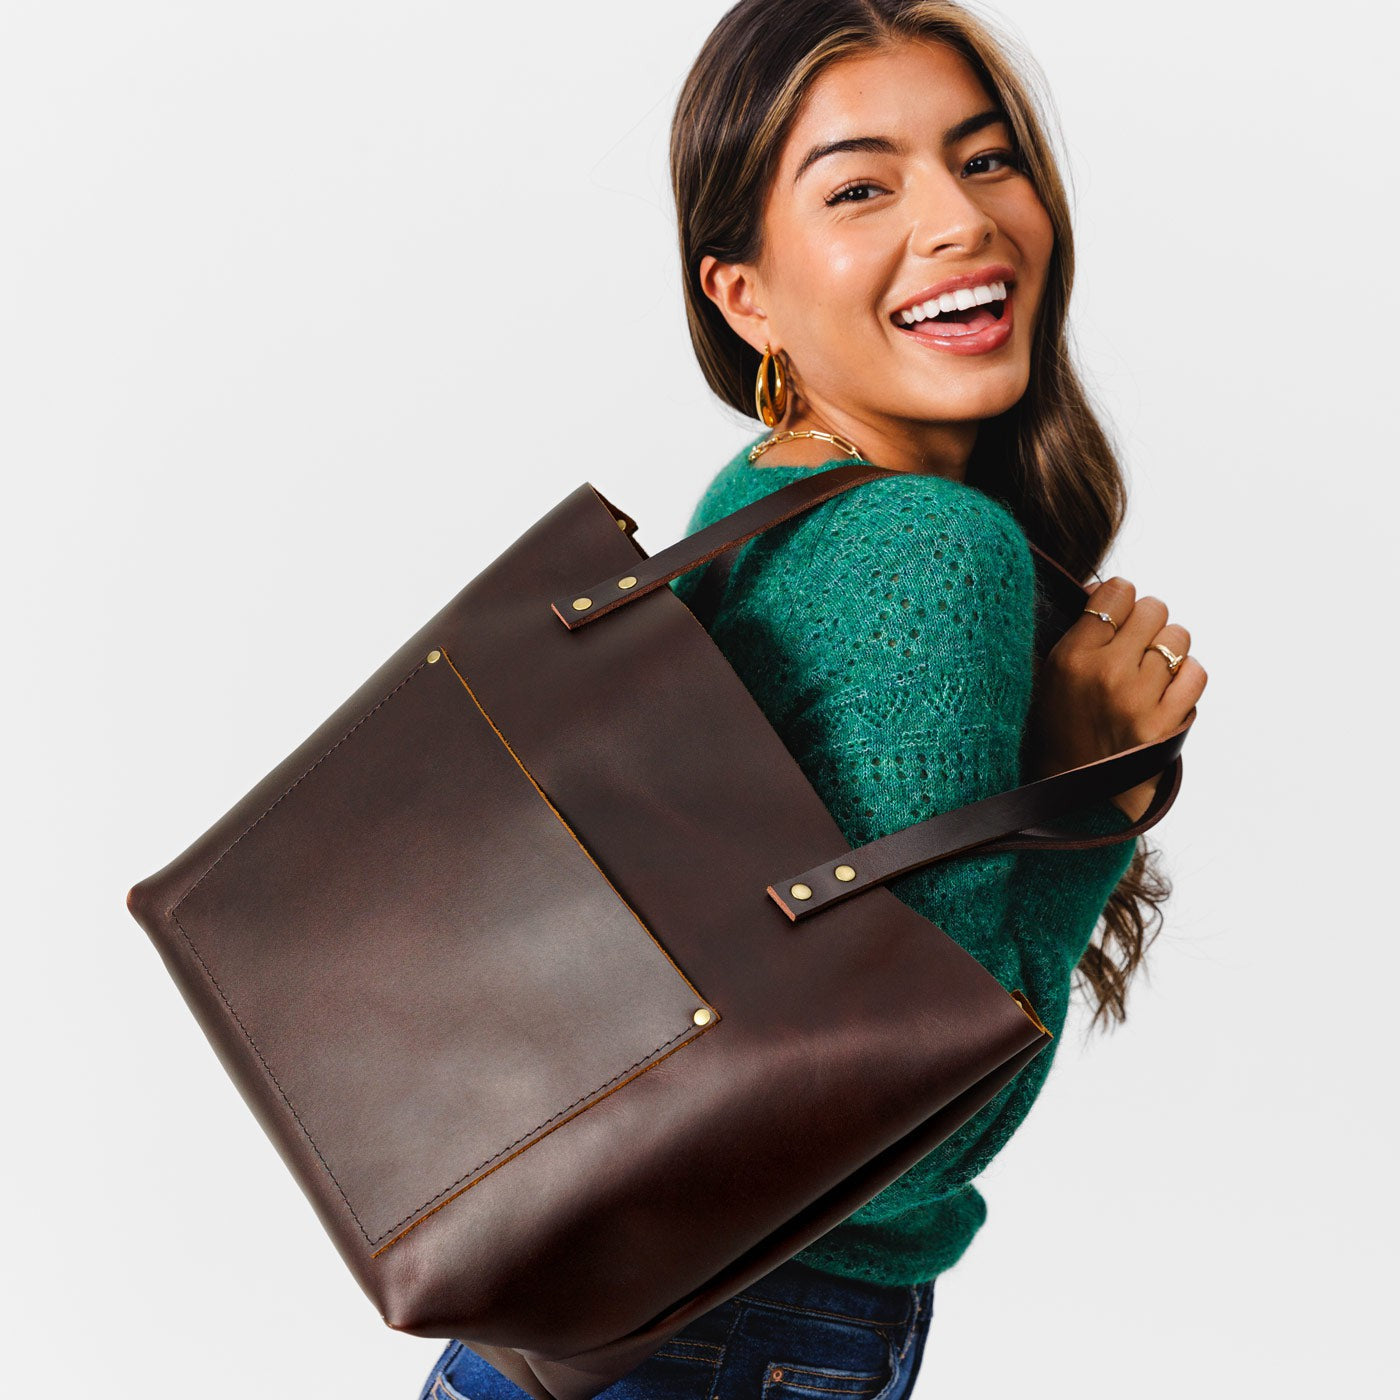 Amazon.com: S-ZONE Women Shoulder Bag Leather Hobo Purse Medium Handbag  Multi-pocket Tote with Tassel : Clothing, Shoes & Jewelry